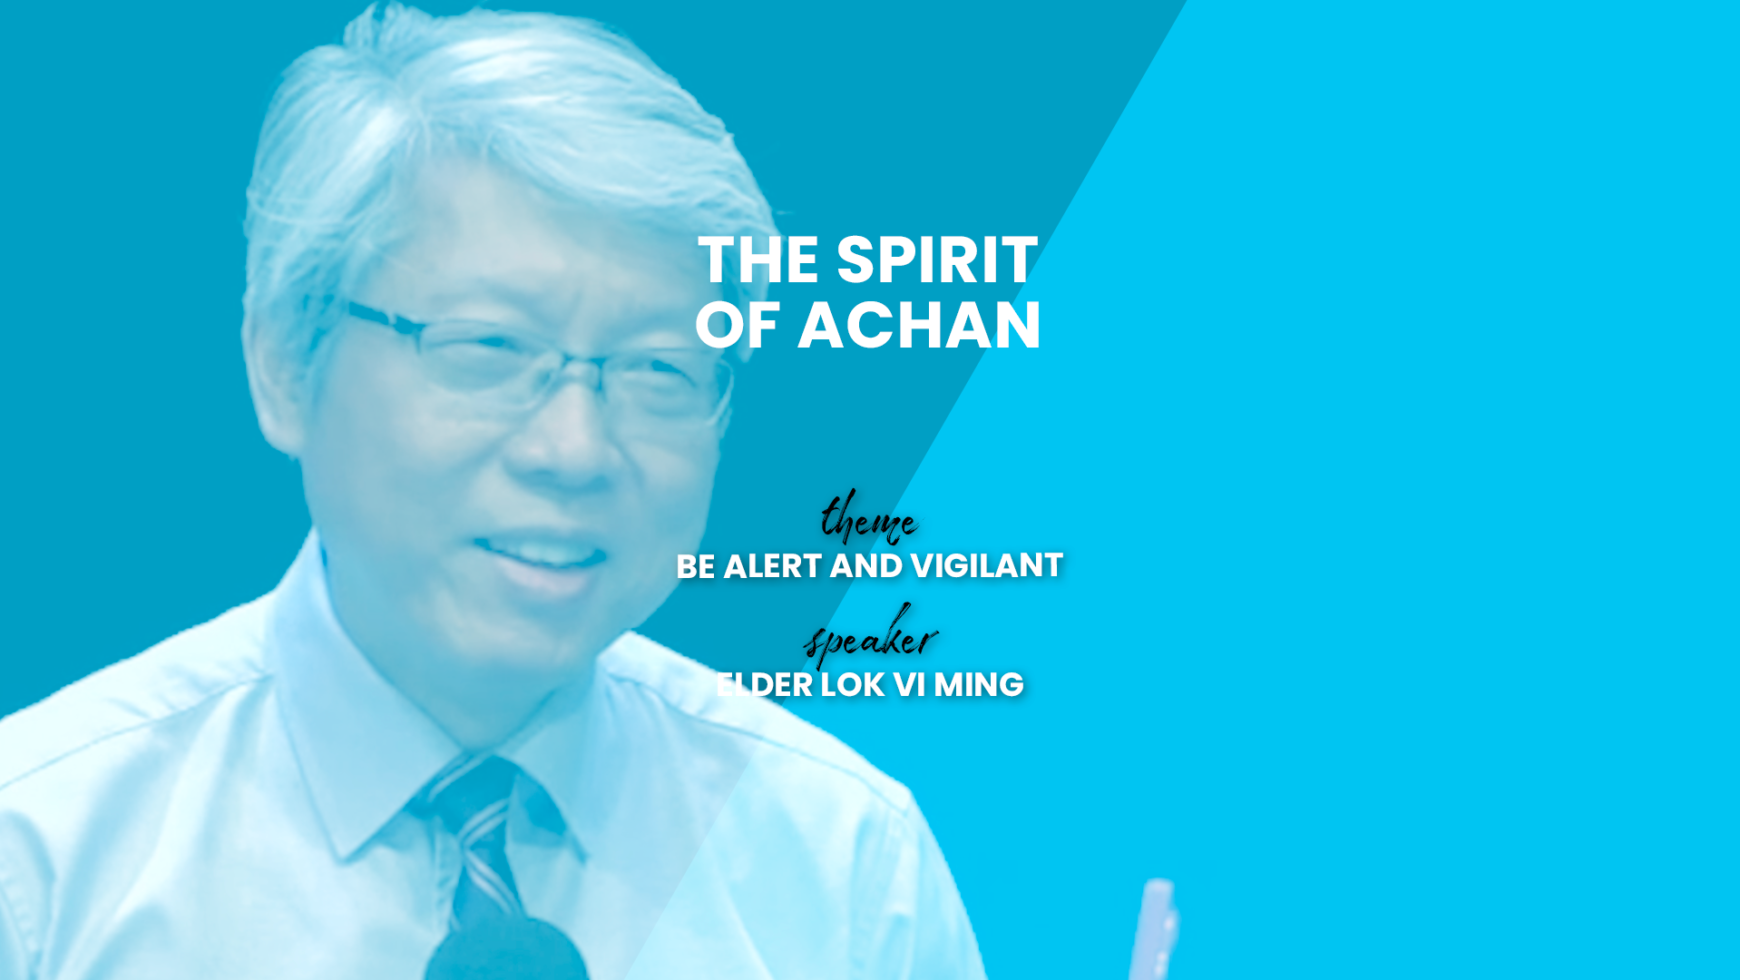 The Spirit of Achan